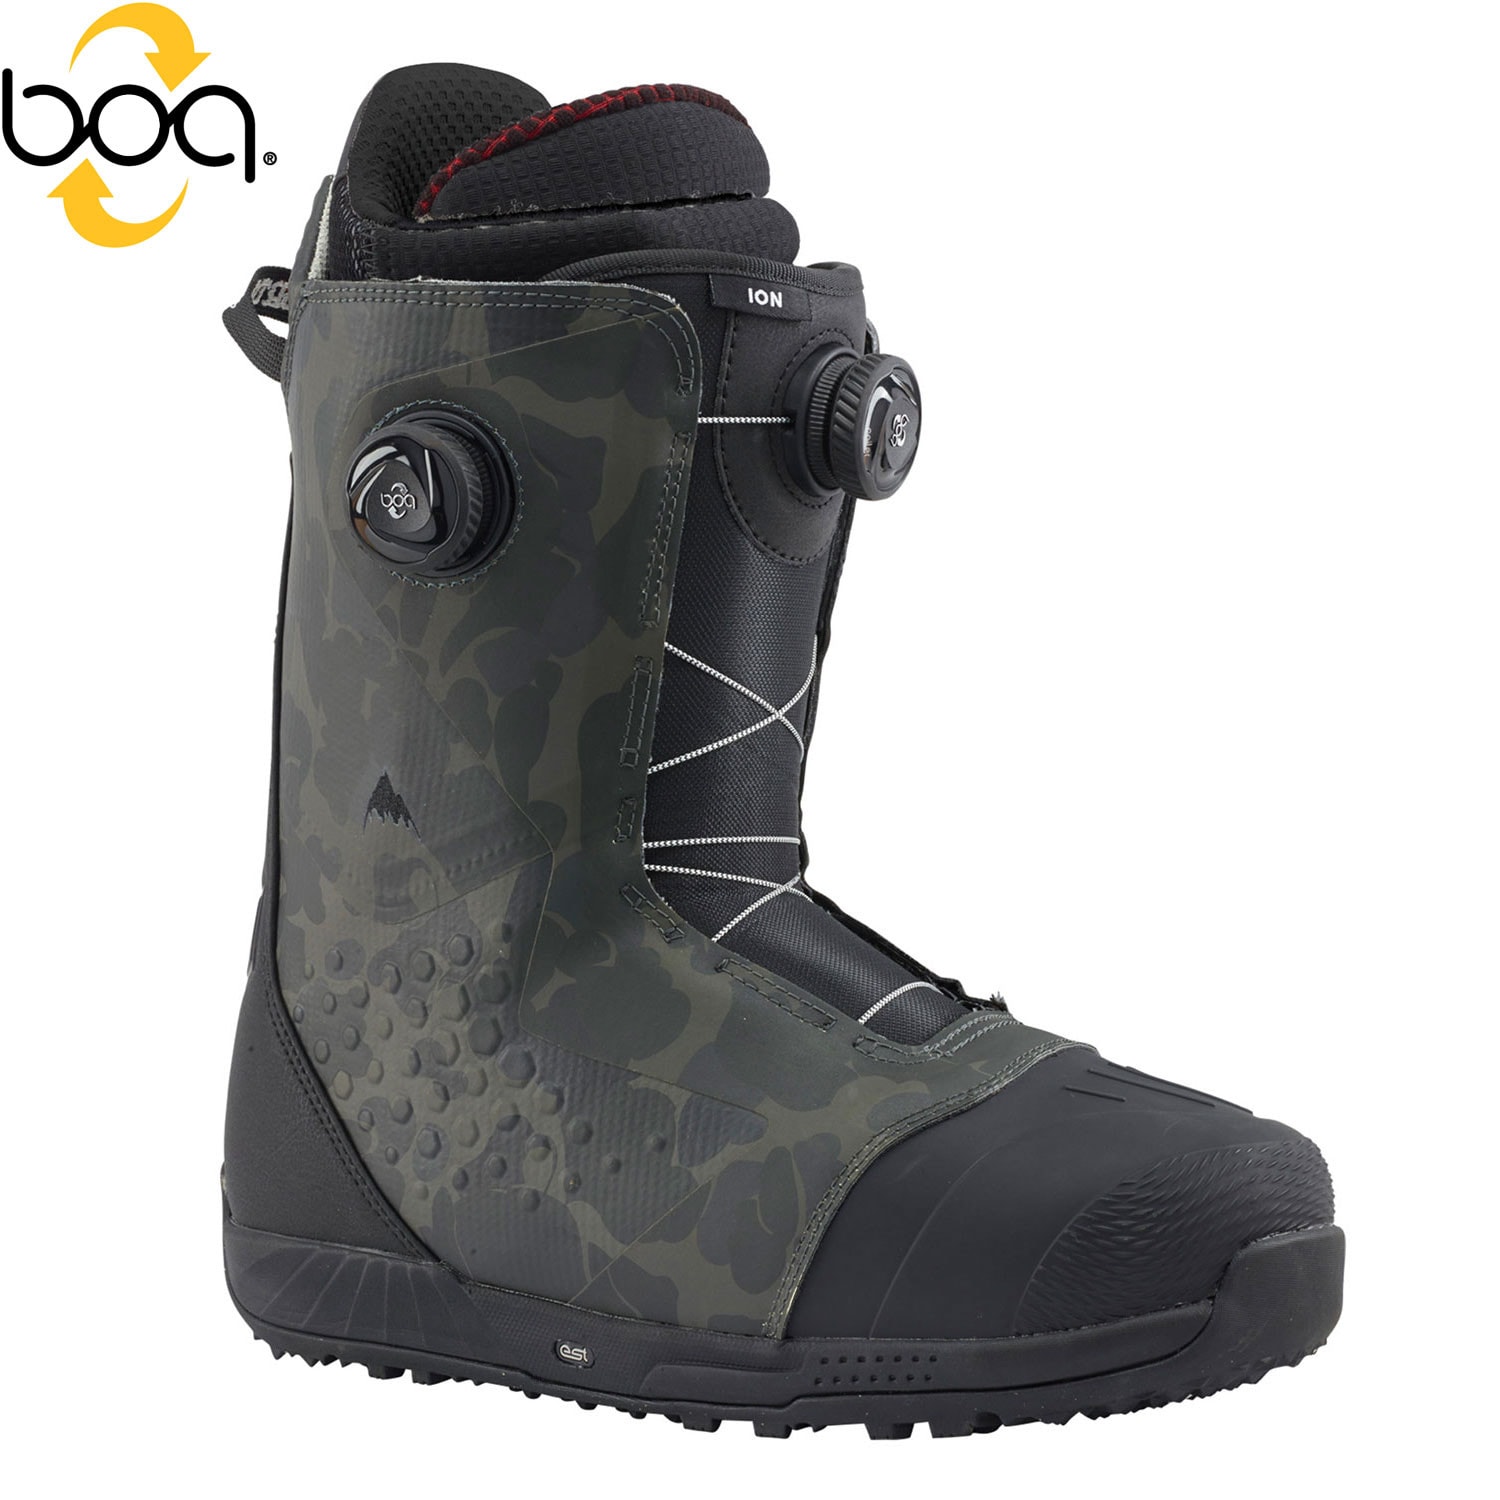 Boots Burton Ion Boa black/camo Snowboard Zezula